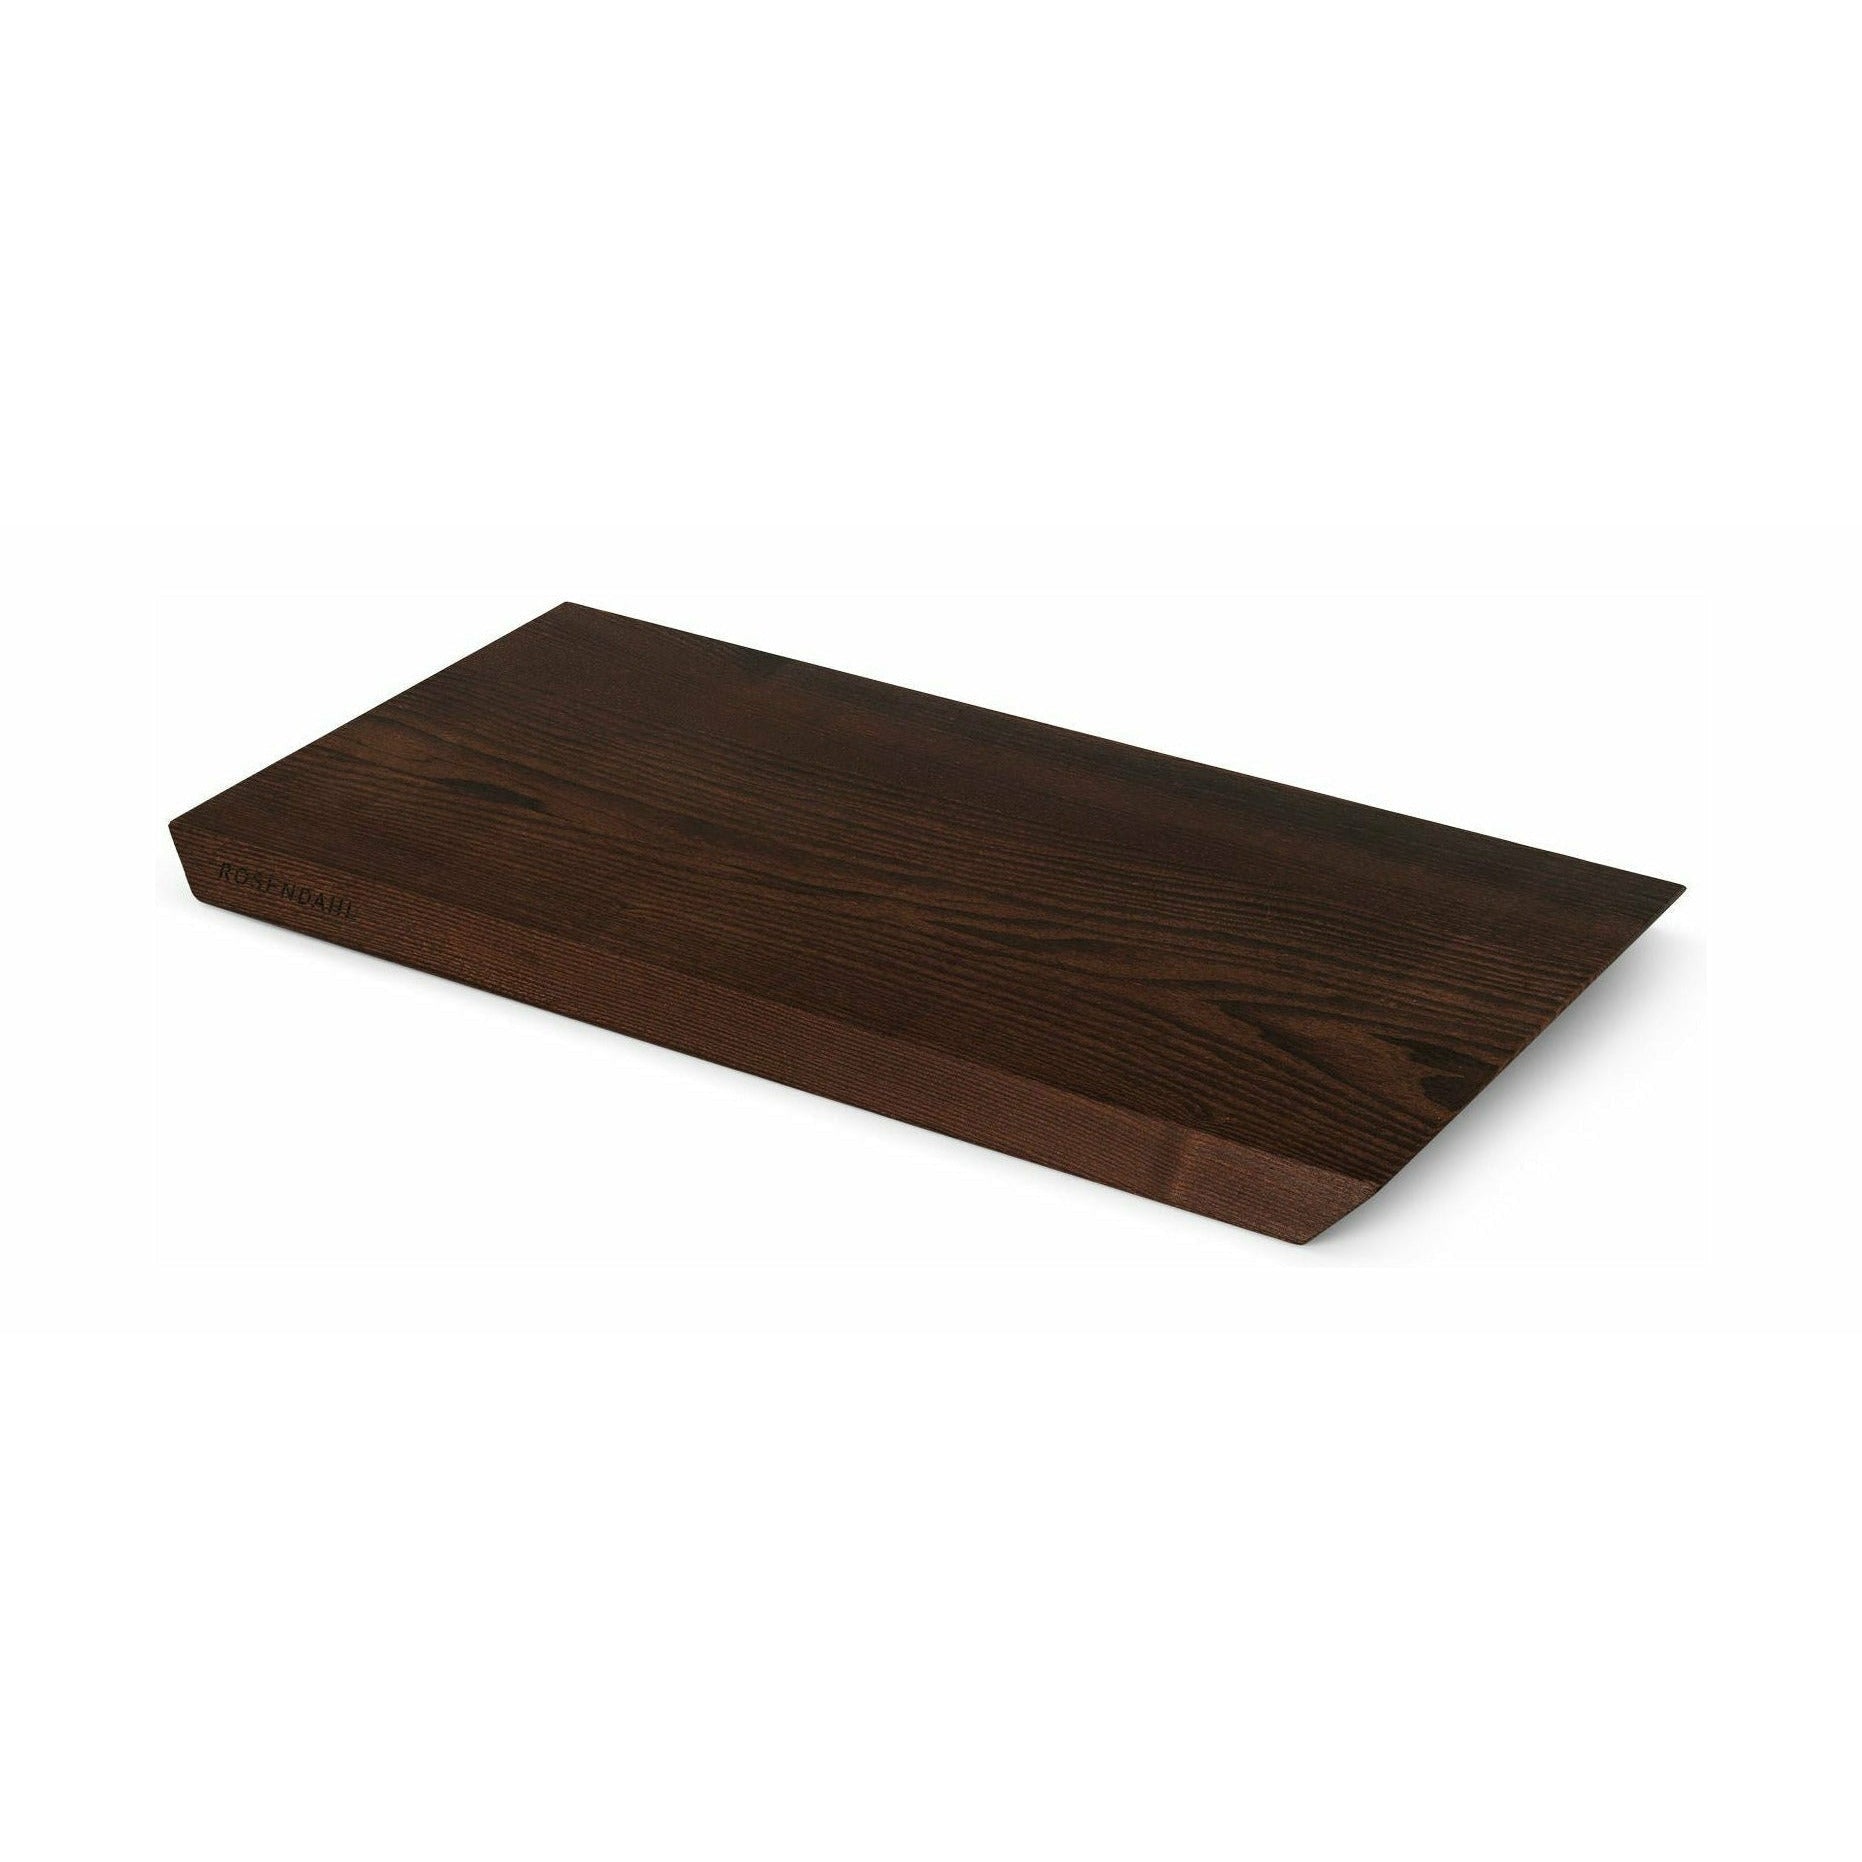 Rosendahl Rå Cutting Board Oak Oiled, 28x51 Cm